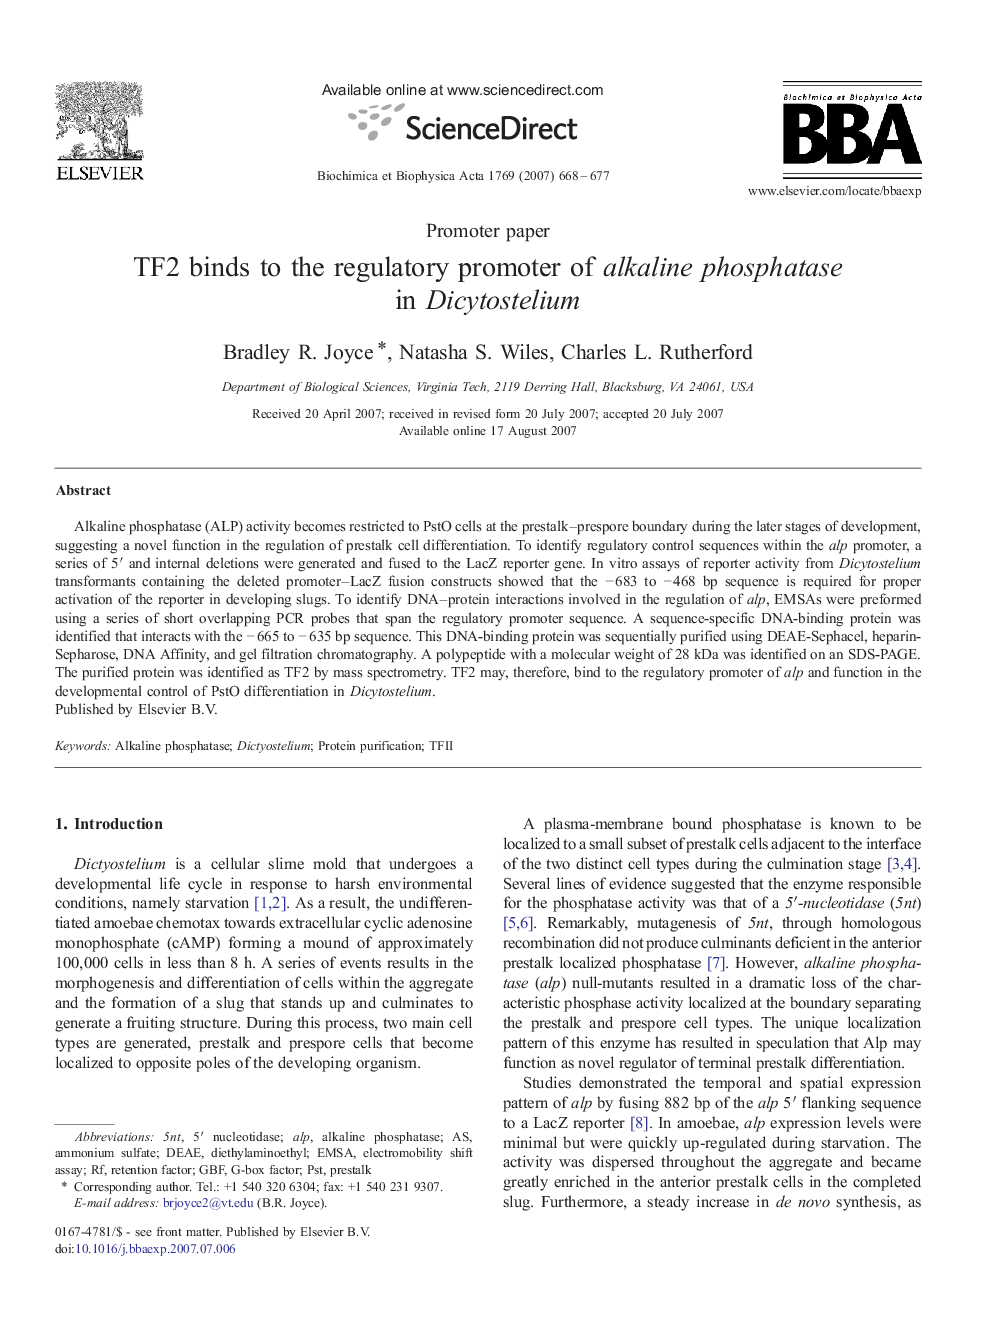 TF2 binds to the regulatory promoter of alkaline phosphatase in Dicytostelium